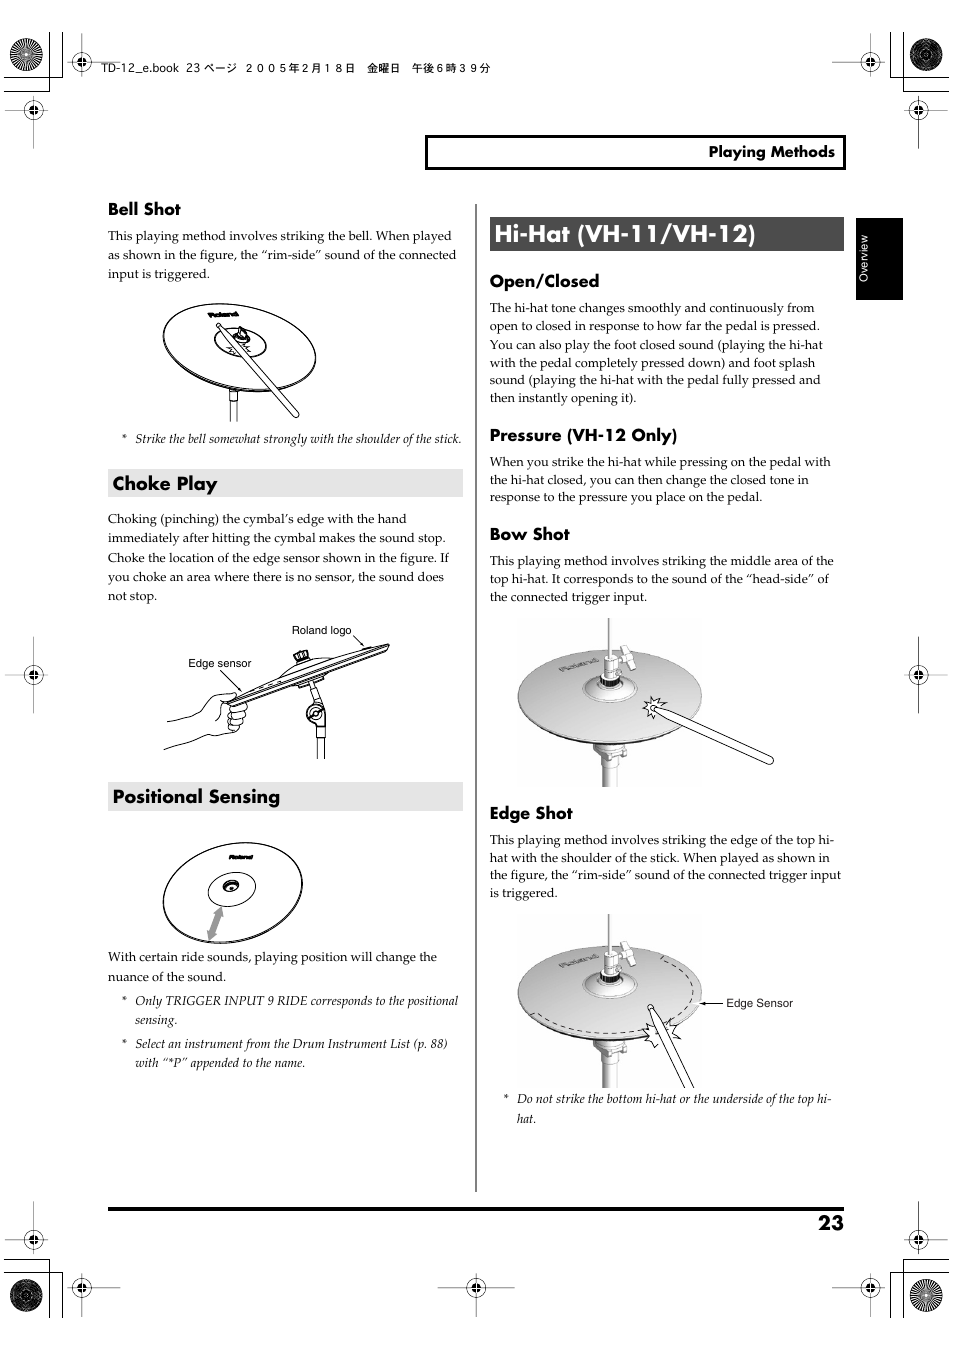 Choke play, Positional sensing, Hi-hat (vh-11/vh-12) | Roland TD-12 User  Manual | Page 23 / 108